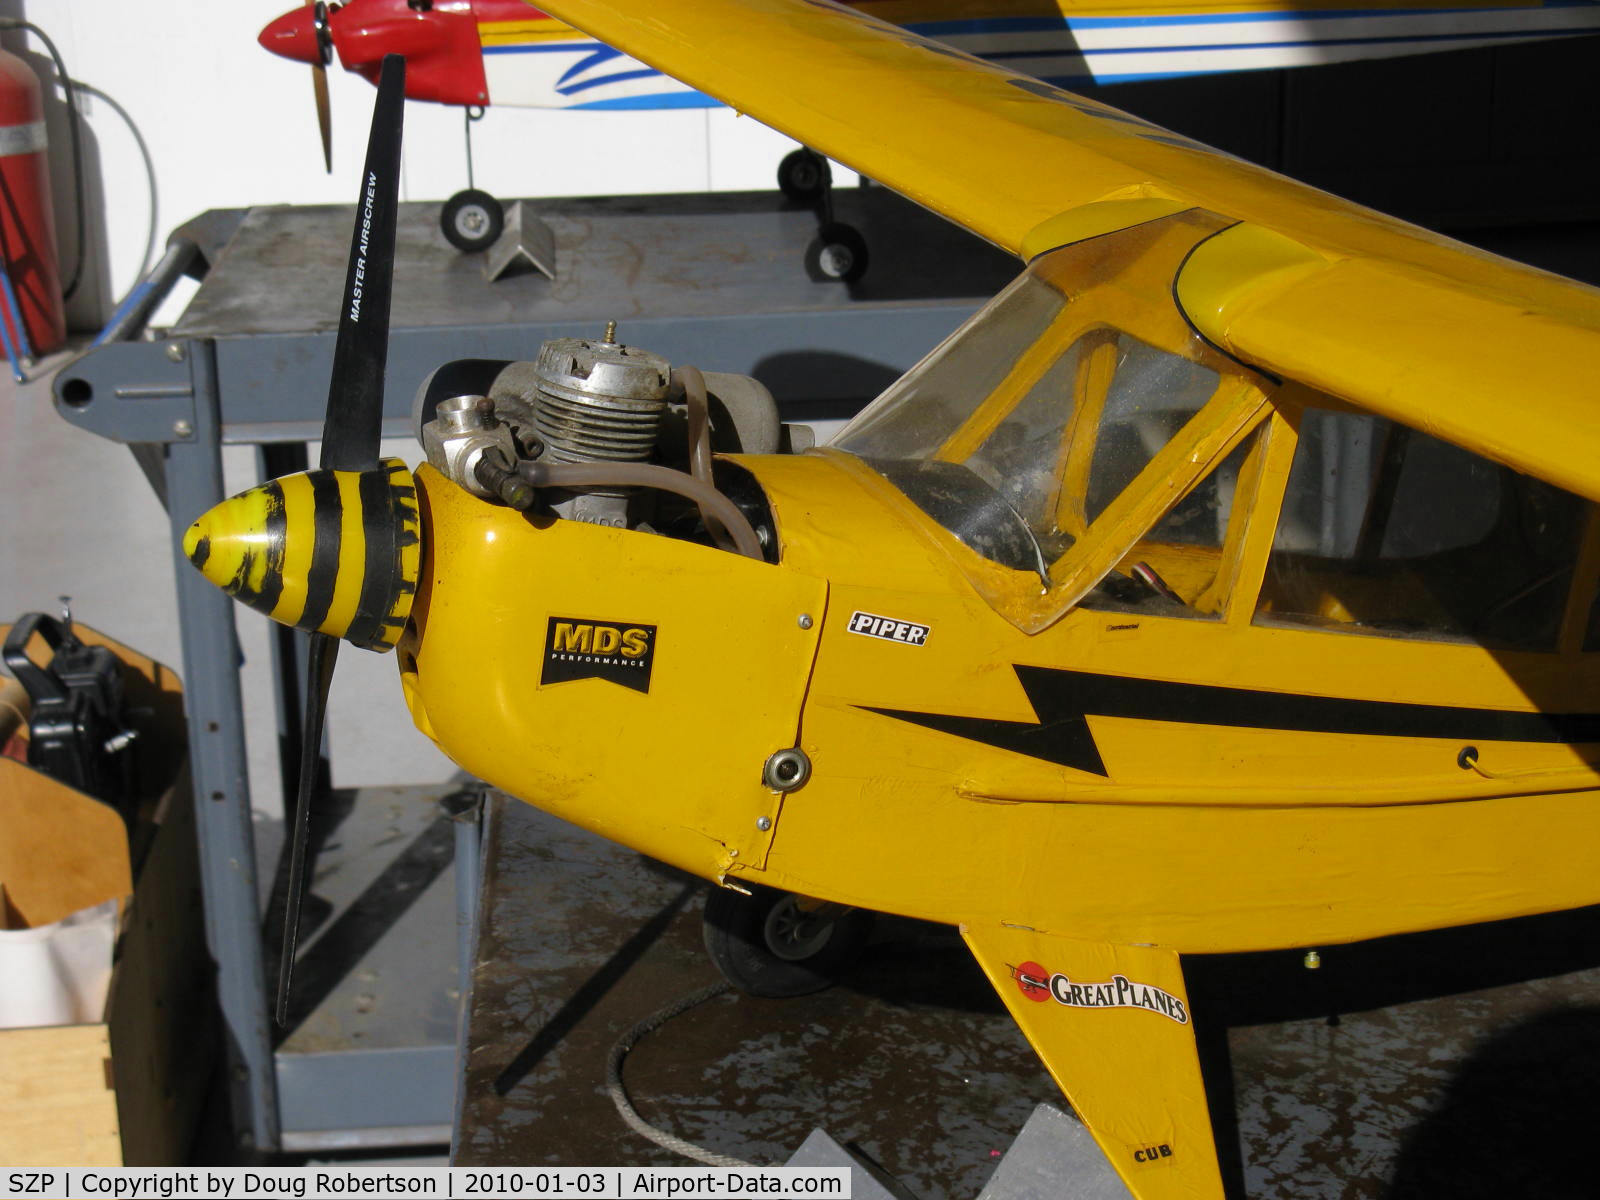 Santa Paula Airport (SZP) - Radio-Control flight models, engine closeup